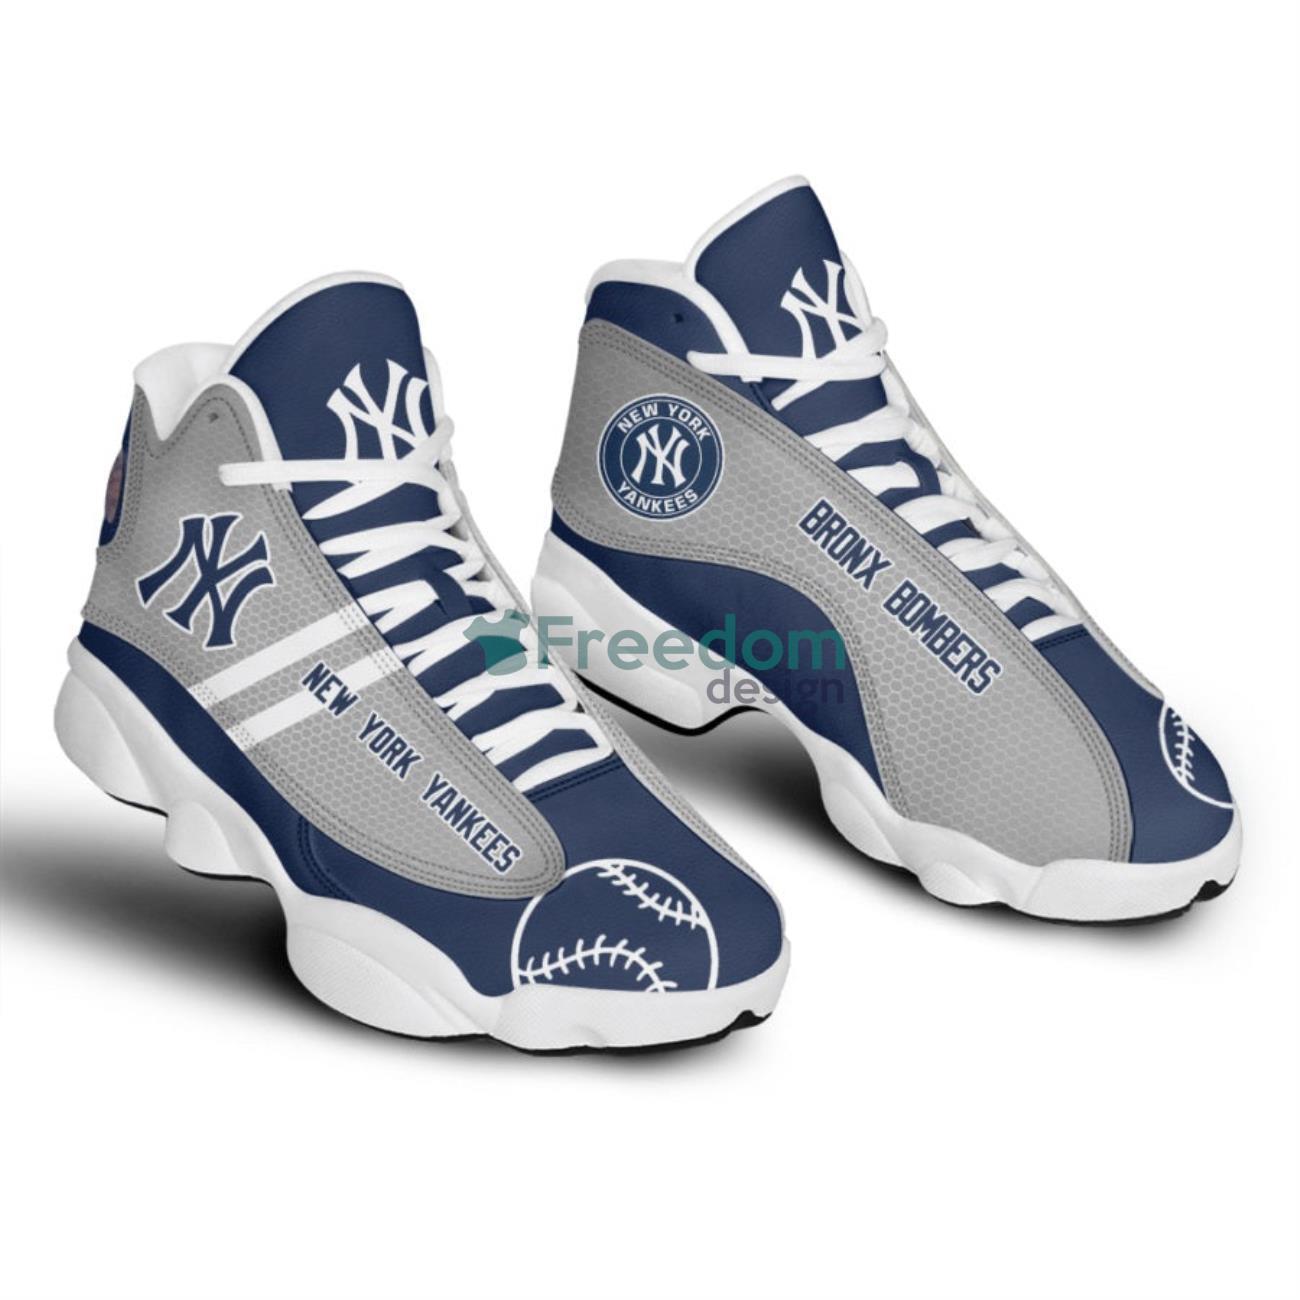 Philadelphia Phillies Cool Air Jordan 13 Sneaker Shoes For Fans